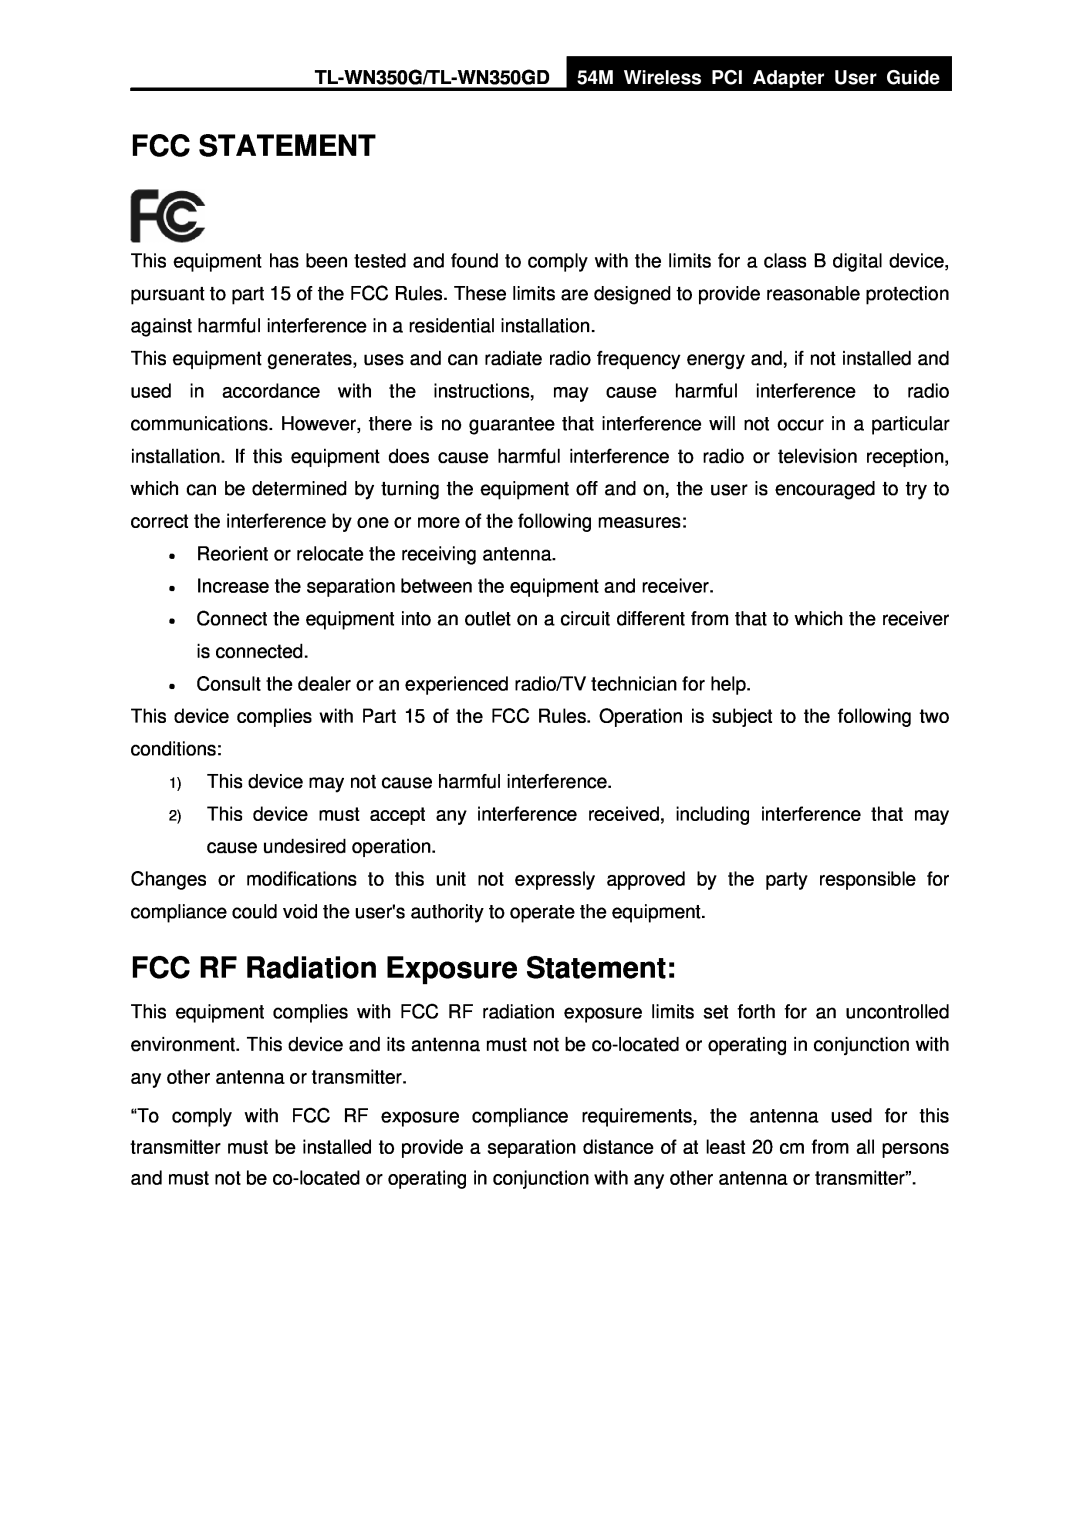 TP-Link Fcc Statement, FCC RF Radiation Exposure Statement, TL-WN350G/TL-WN350GD, 54M Wireless PCI Adapter User Guide 